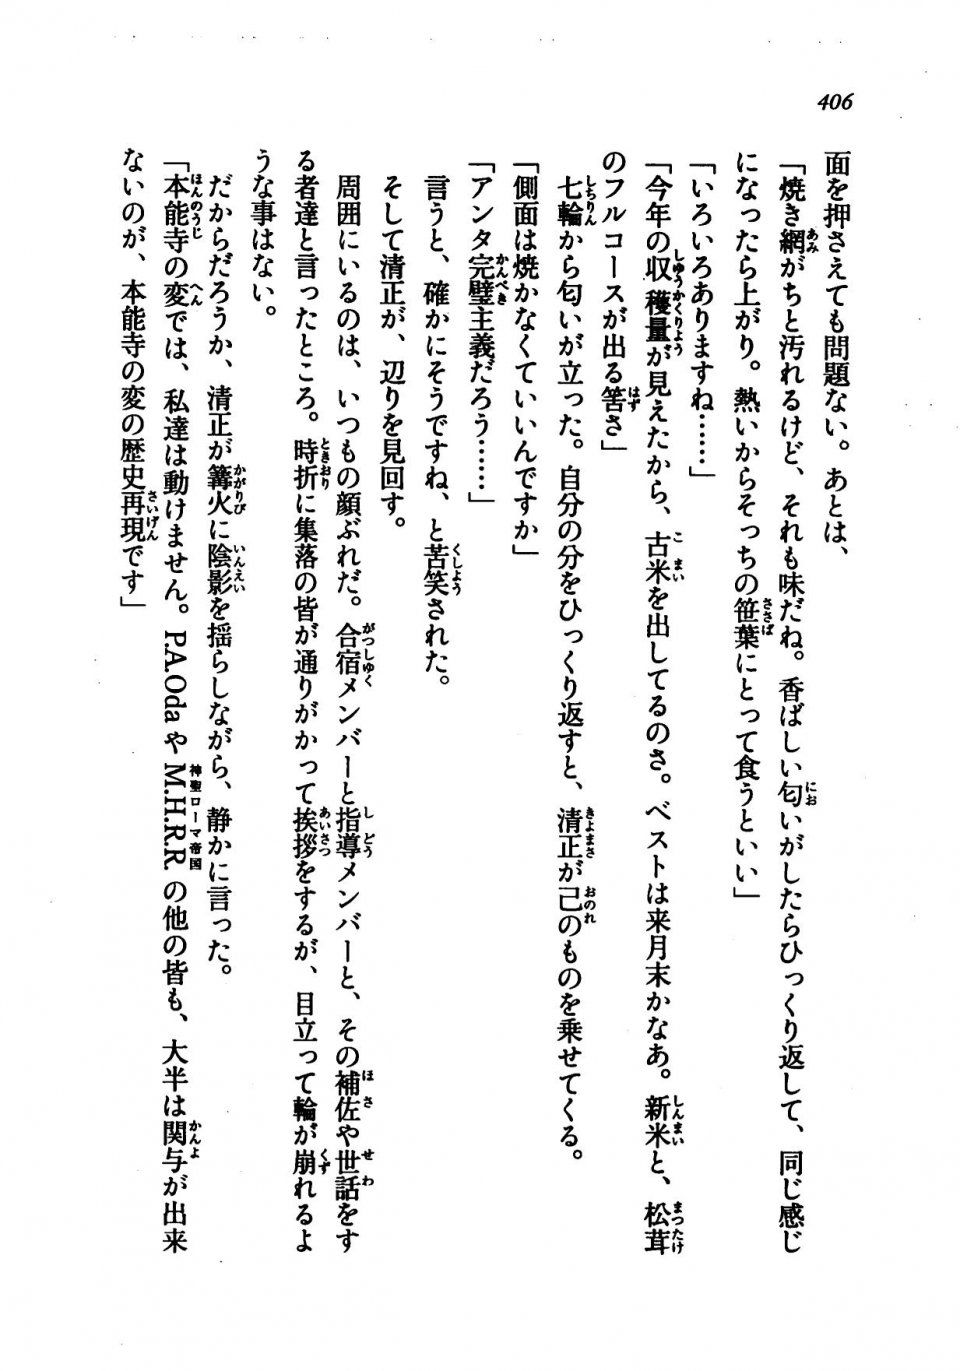 Kyoukai Senjou no Horizon LN Vol 21(8C) Part 1 - Photo #405